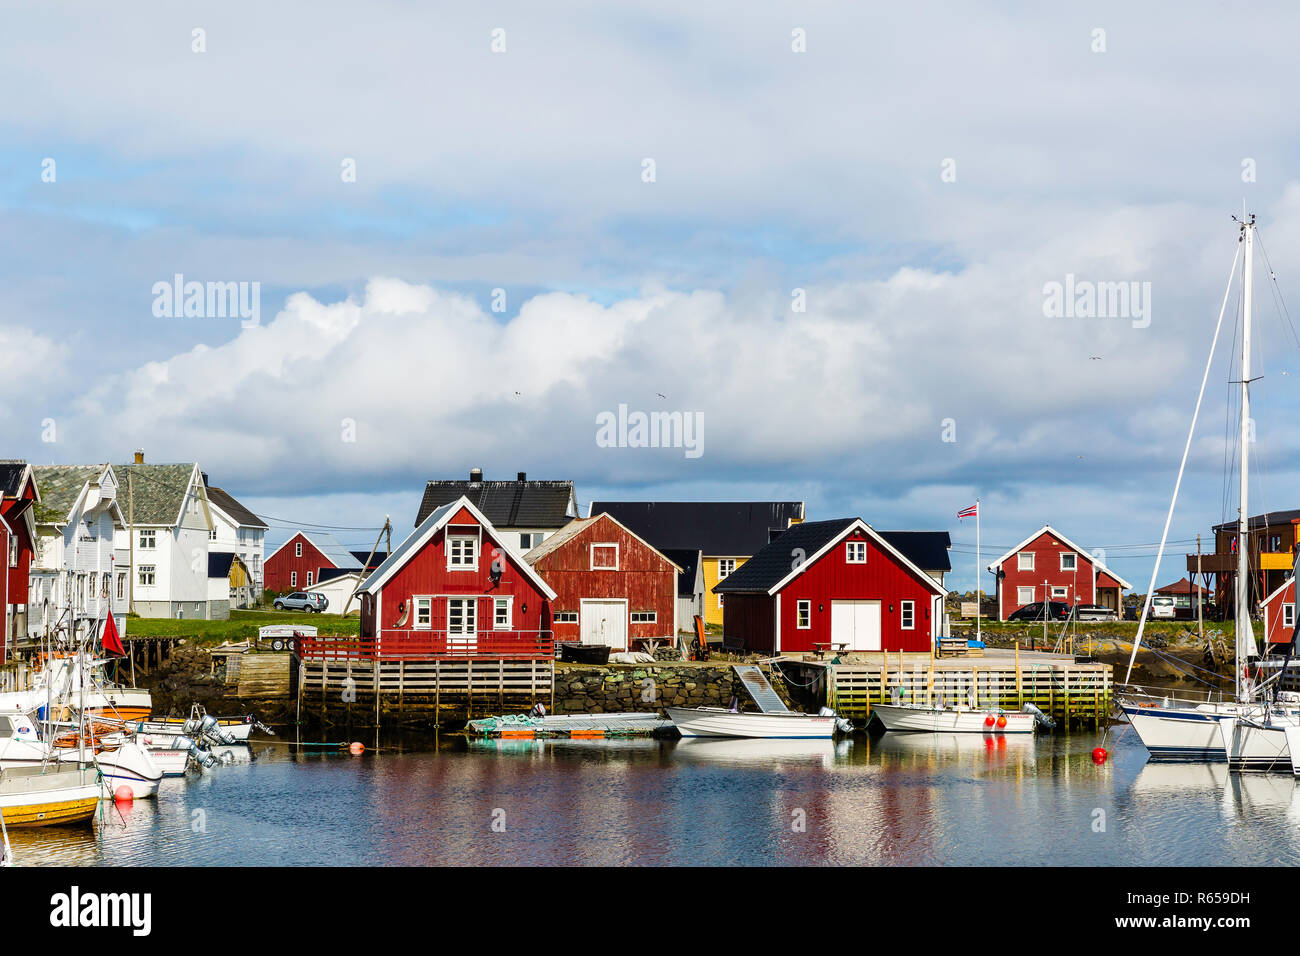 The fishing village of Veilholmen on the island of Smola, Norway. Stock Photo